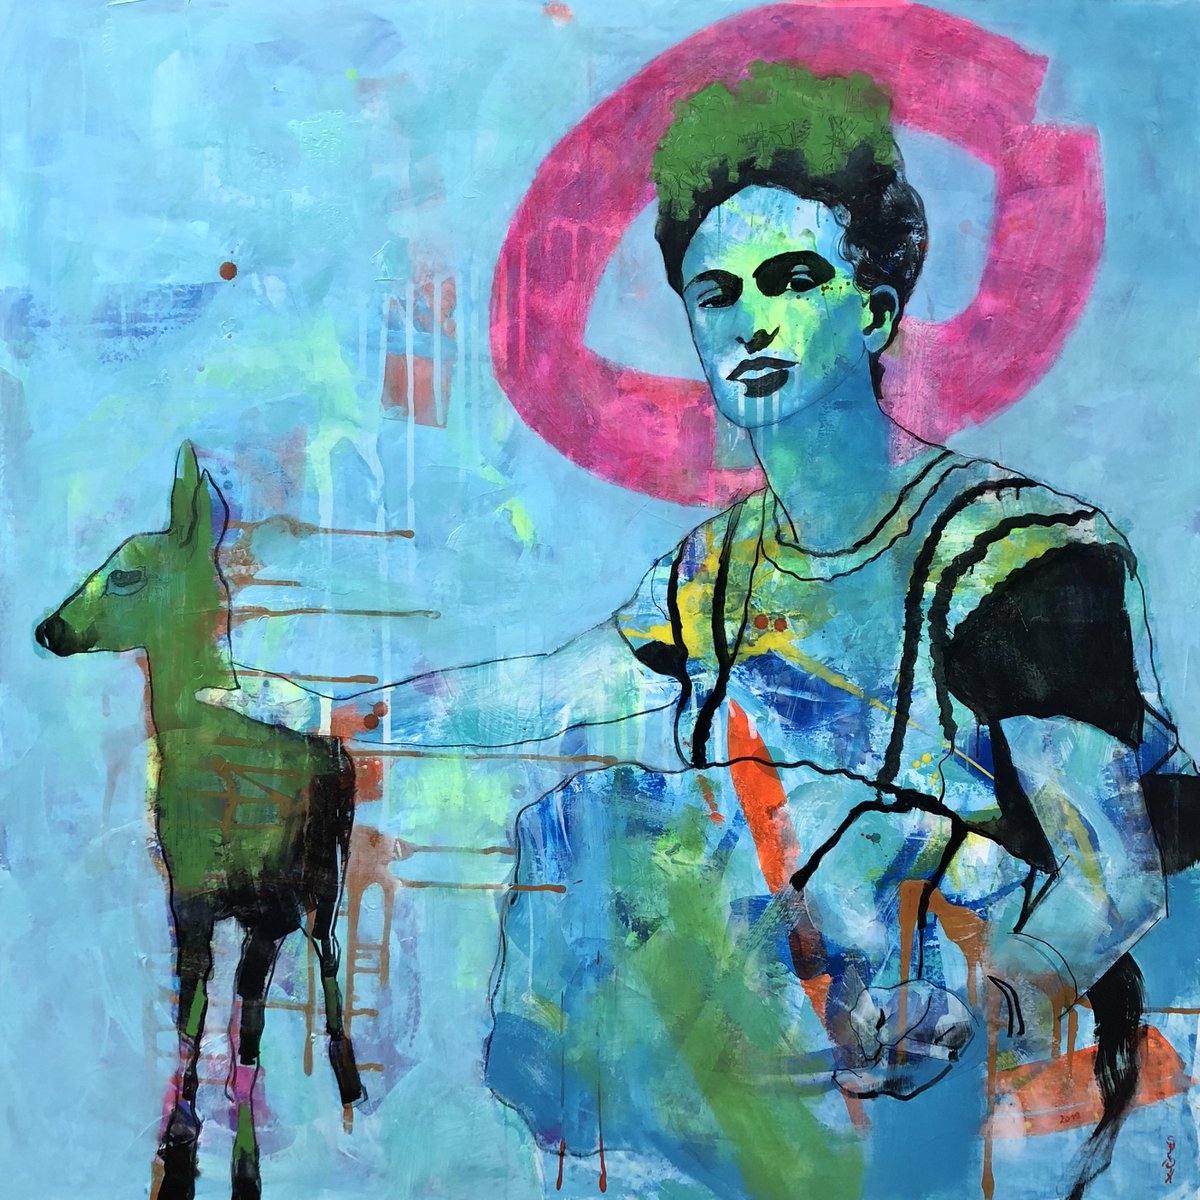 Frida with broken glory by Peter Jakab Szoke